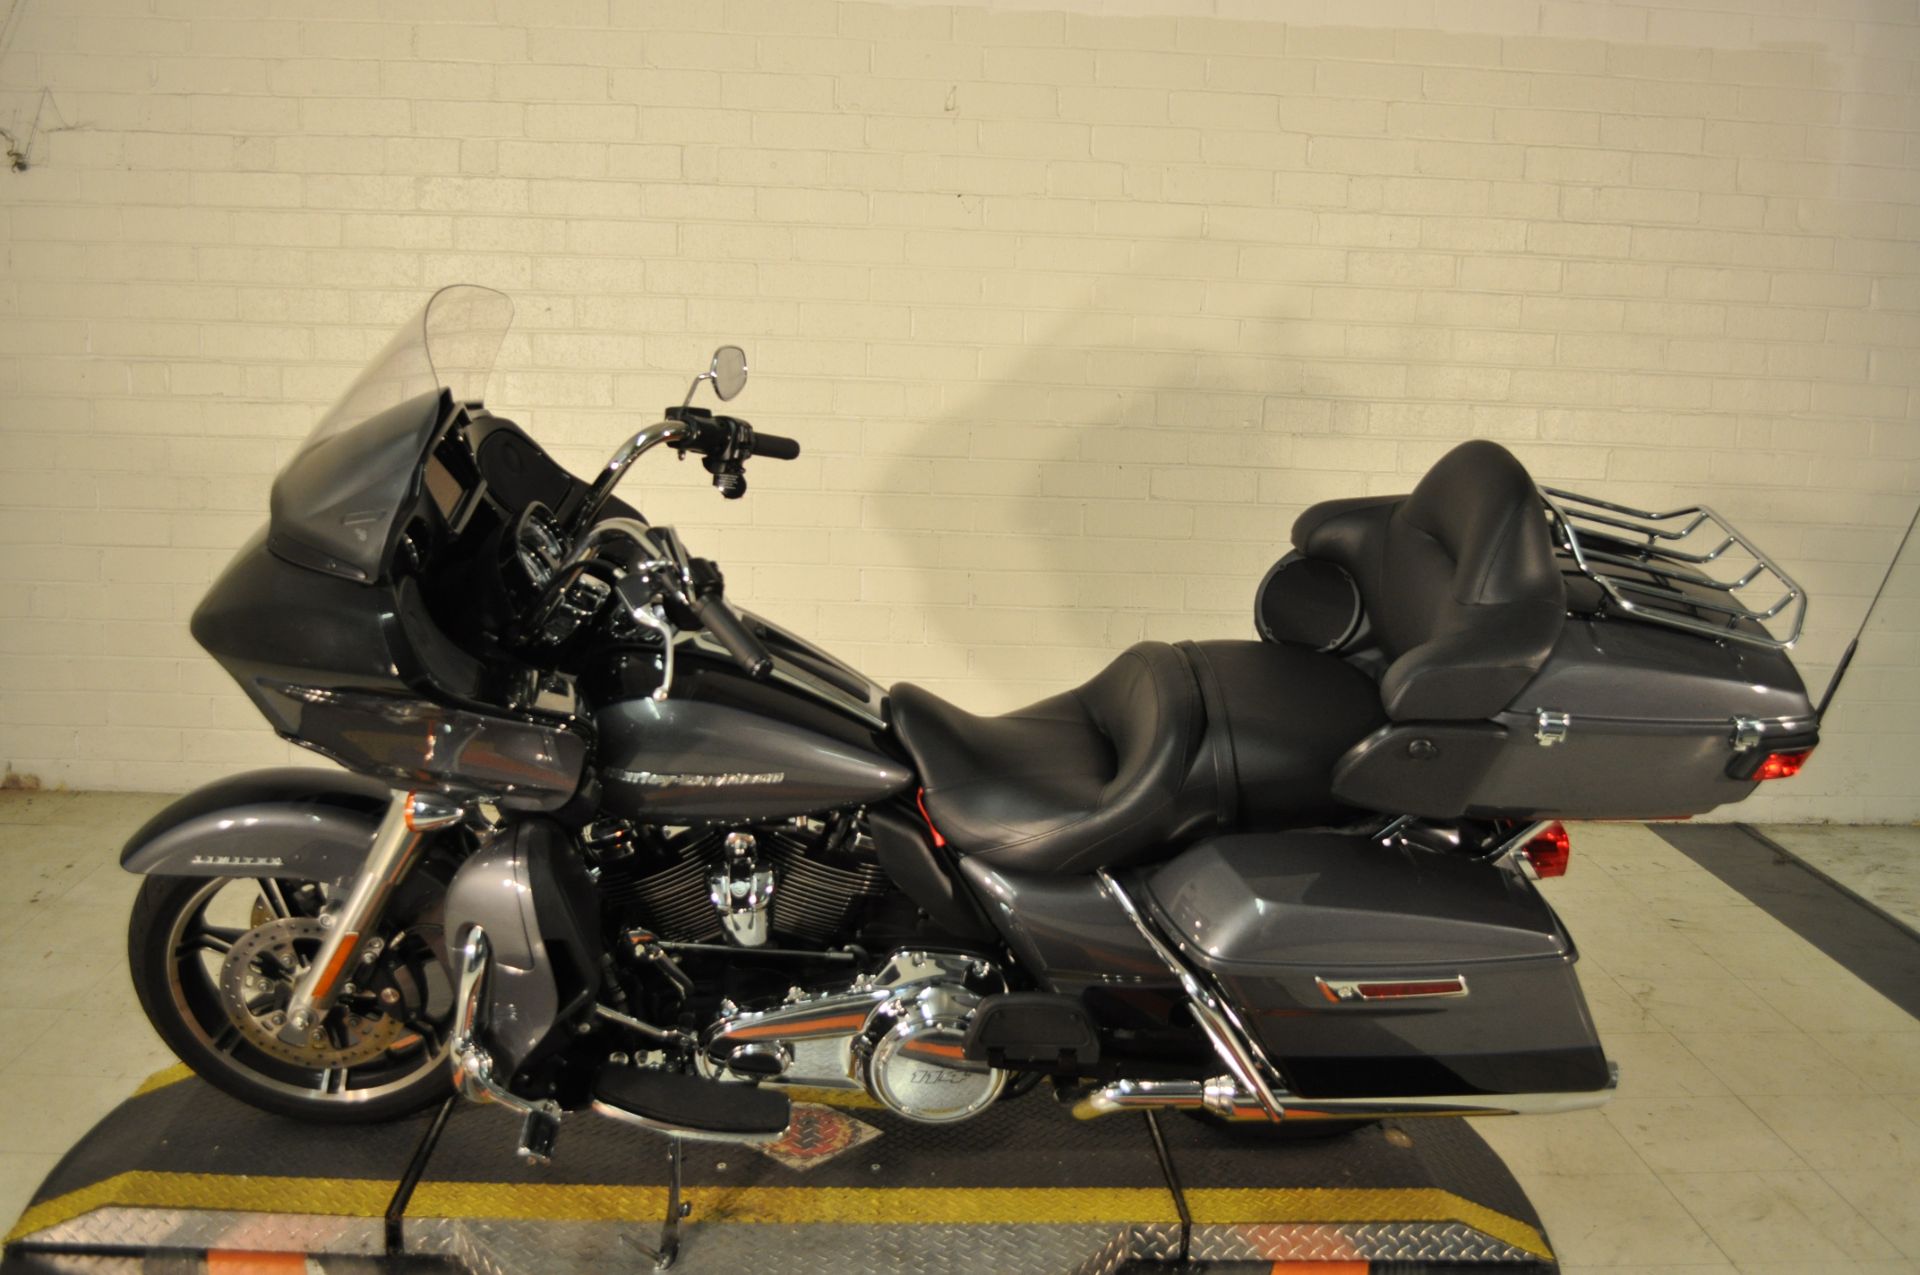 2022 Harley-Davidson Road Glide® Limited in Winston Salem, North Carolina - Photo 18